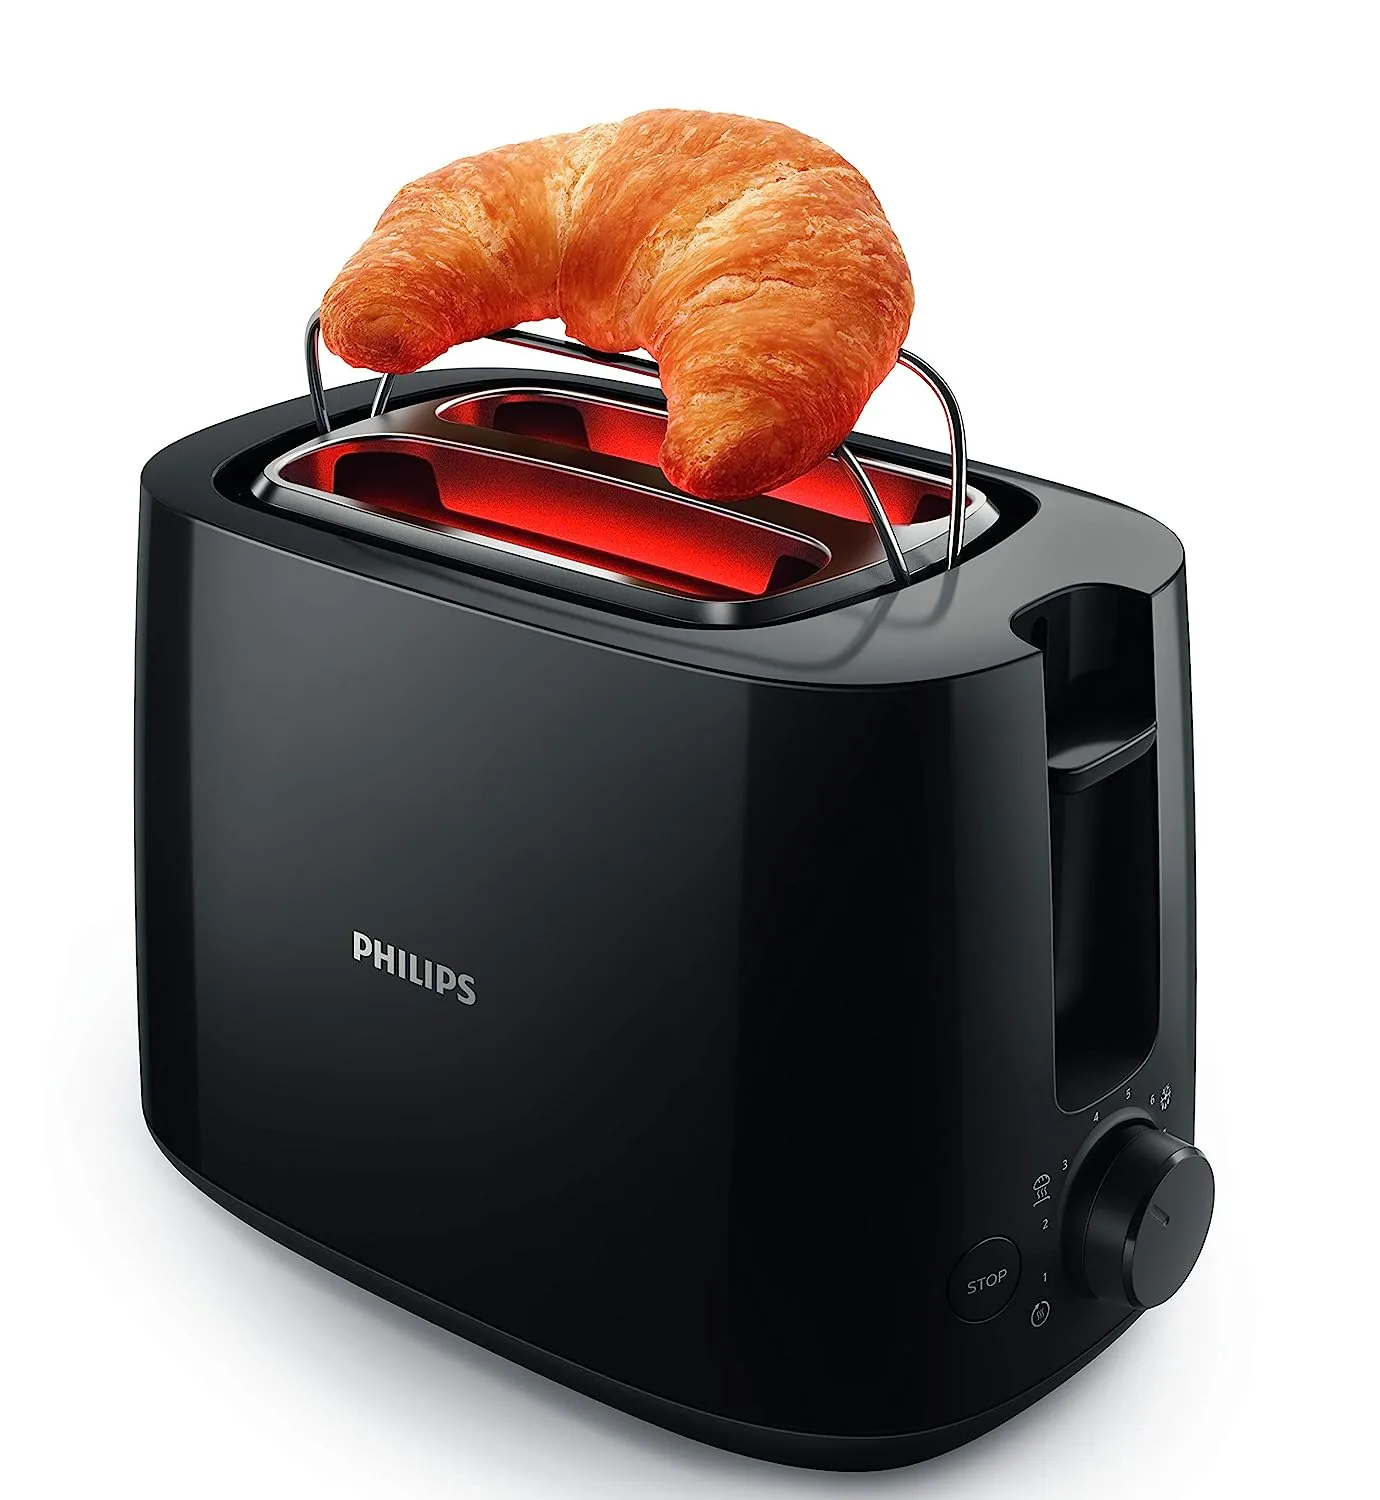 bread toasters, Image Credit - Amazon